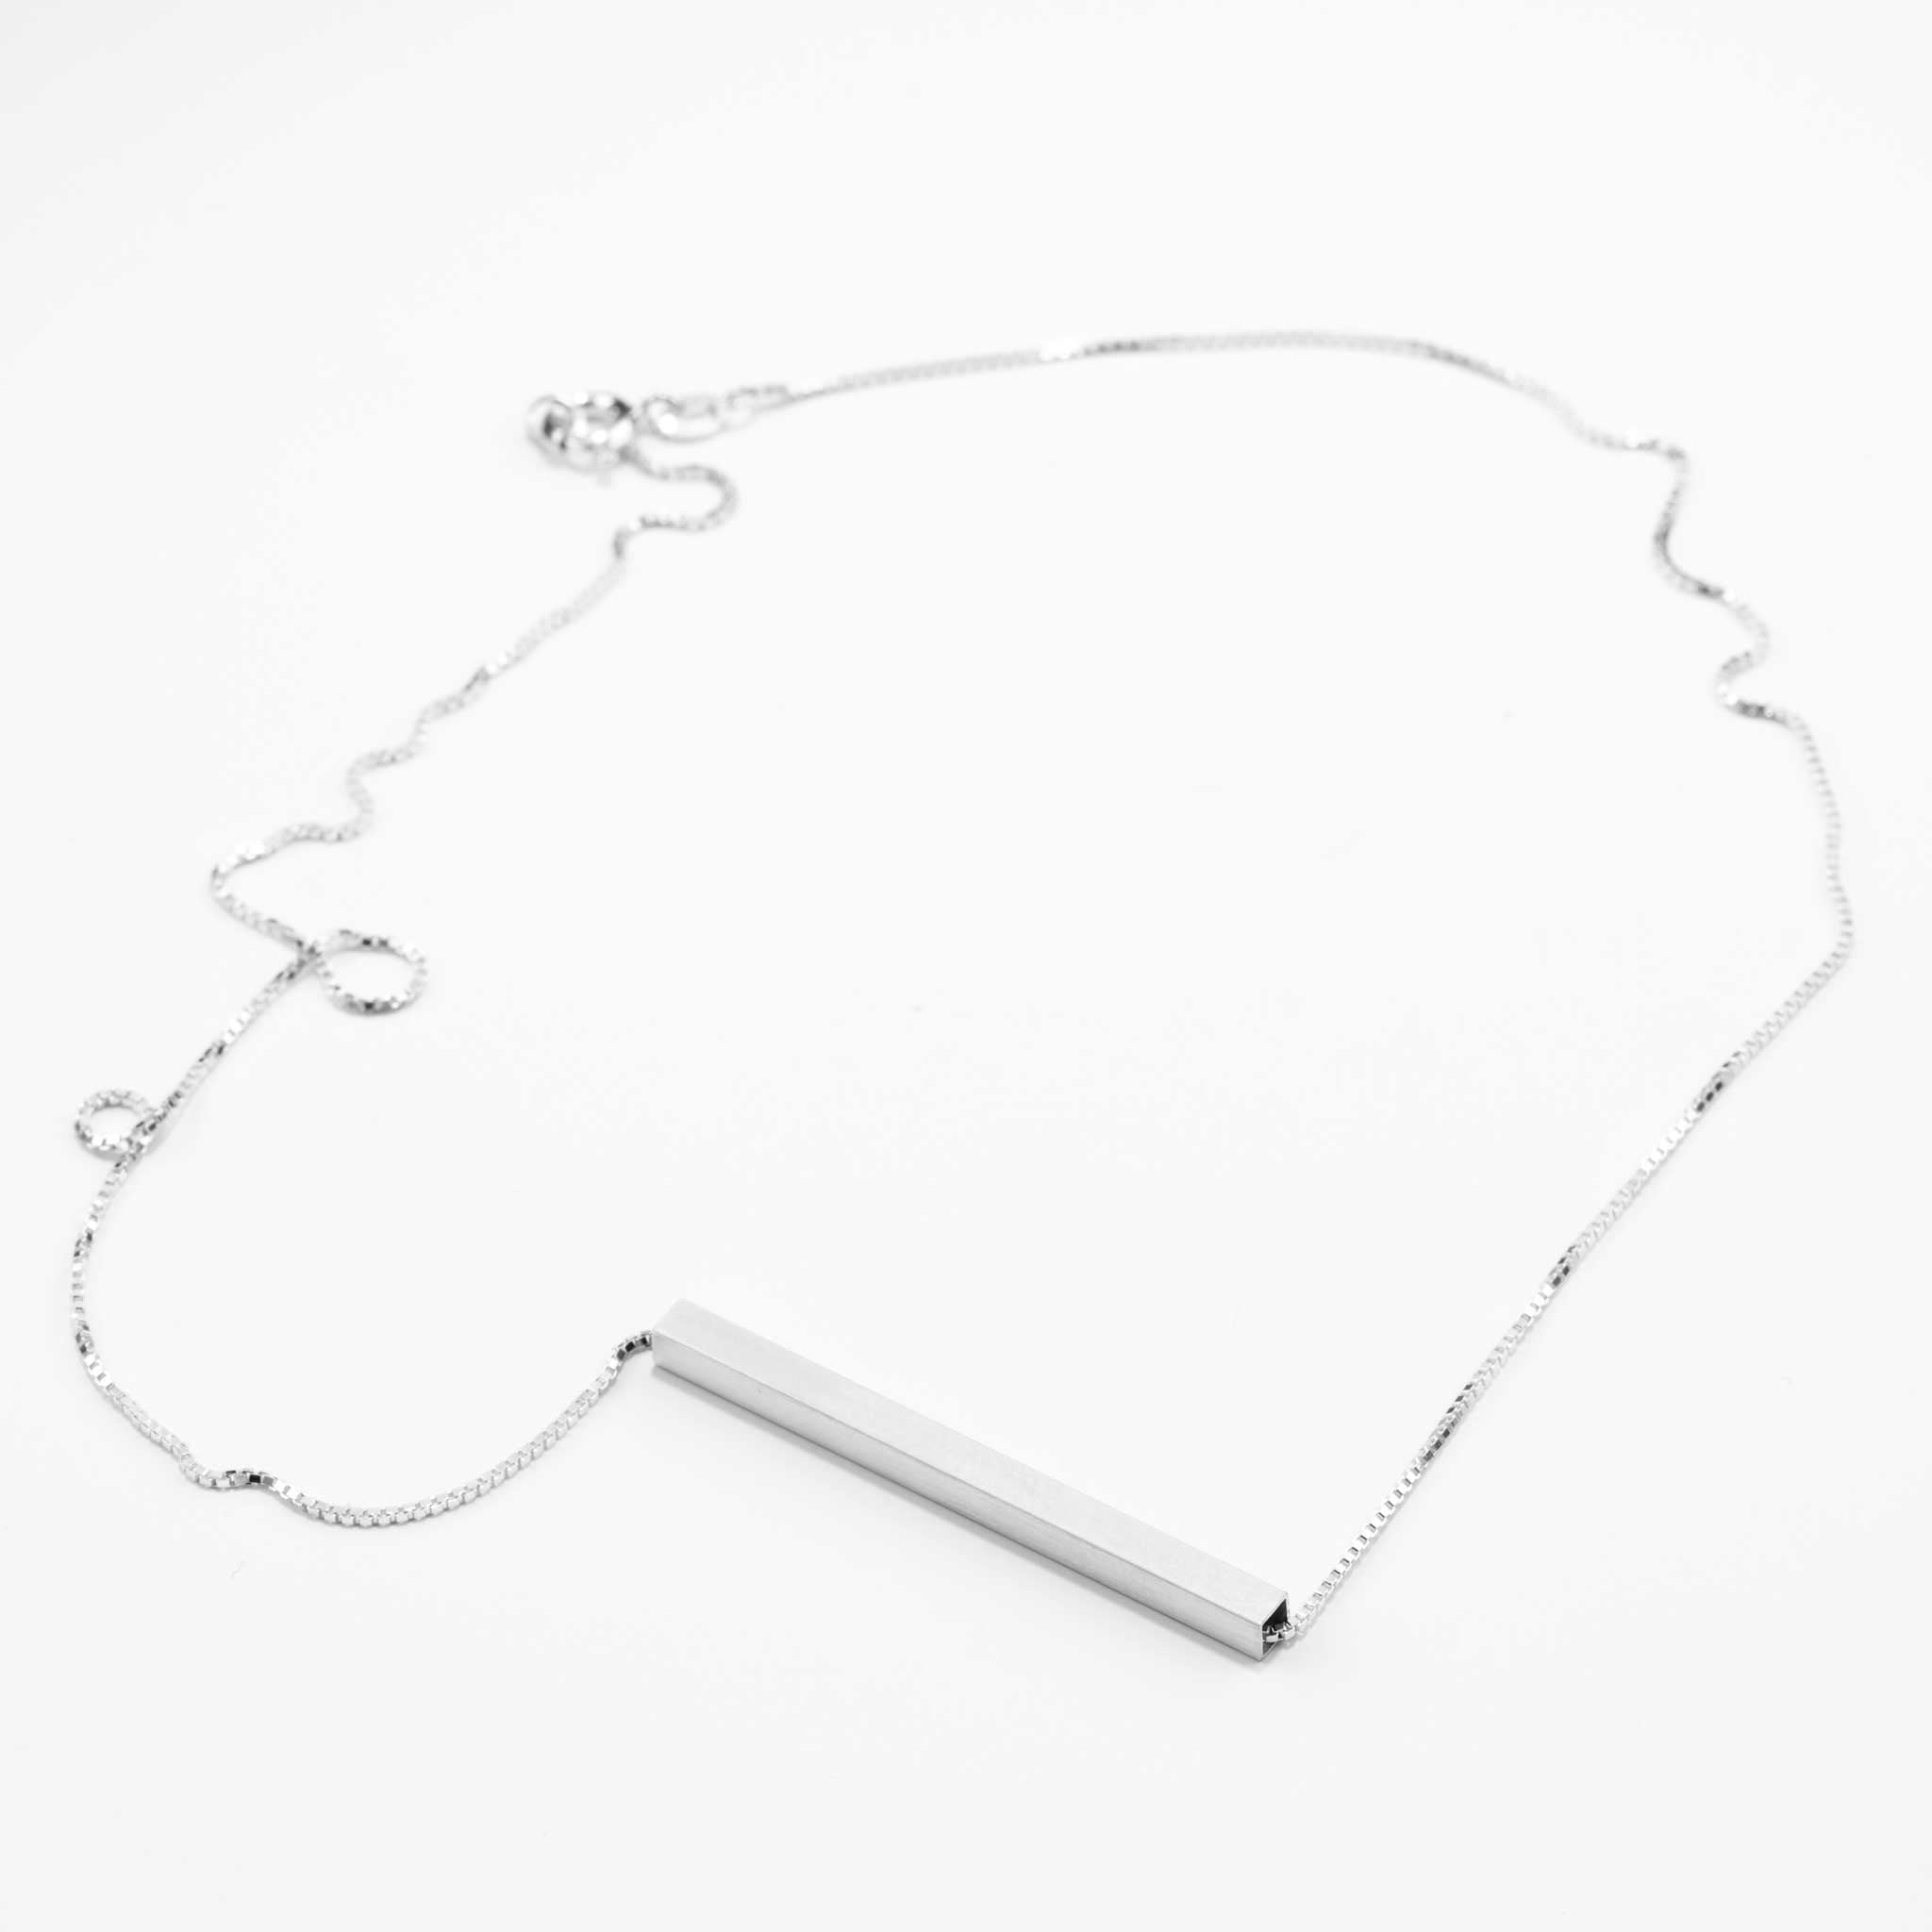 SQUARE matte | NECKLACE Sterling Silver 925 | 43 cm long | Jonathan Radetz